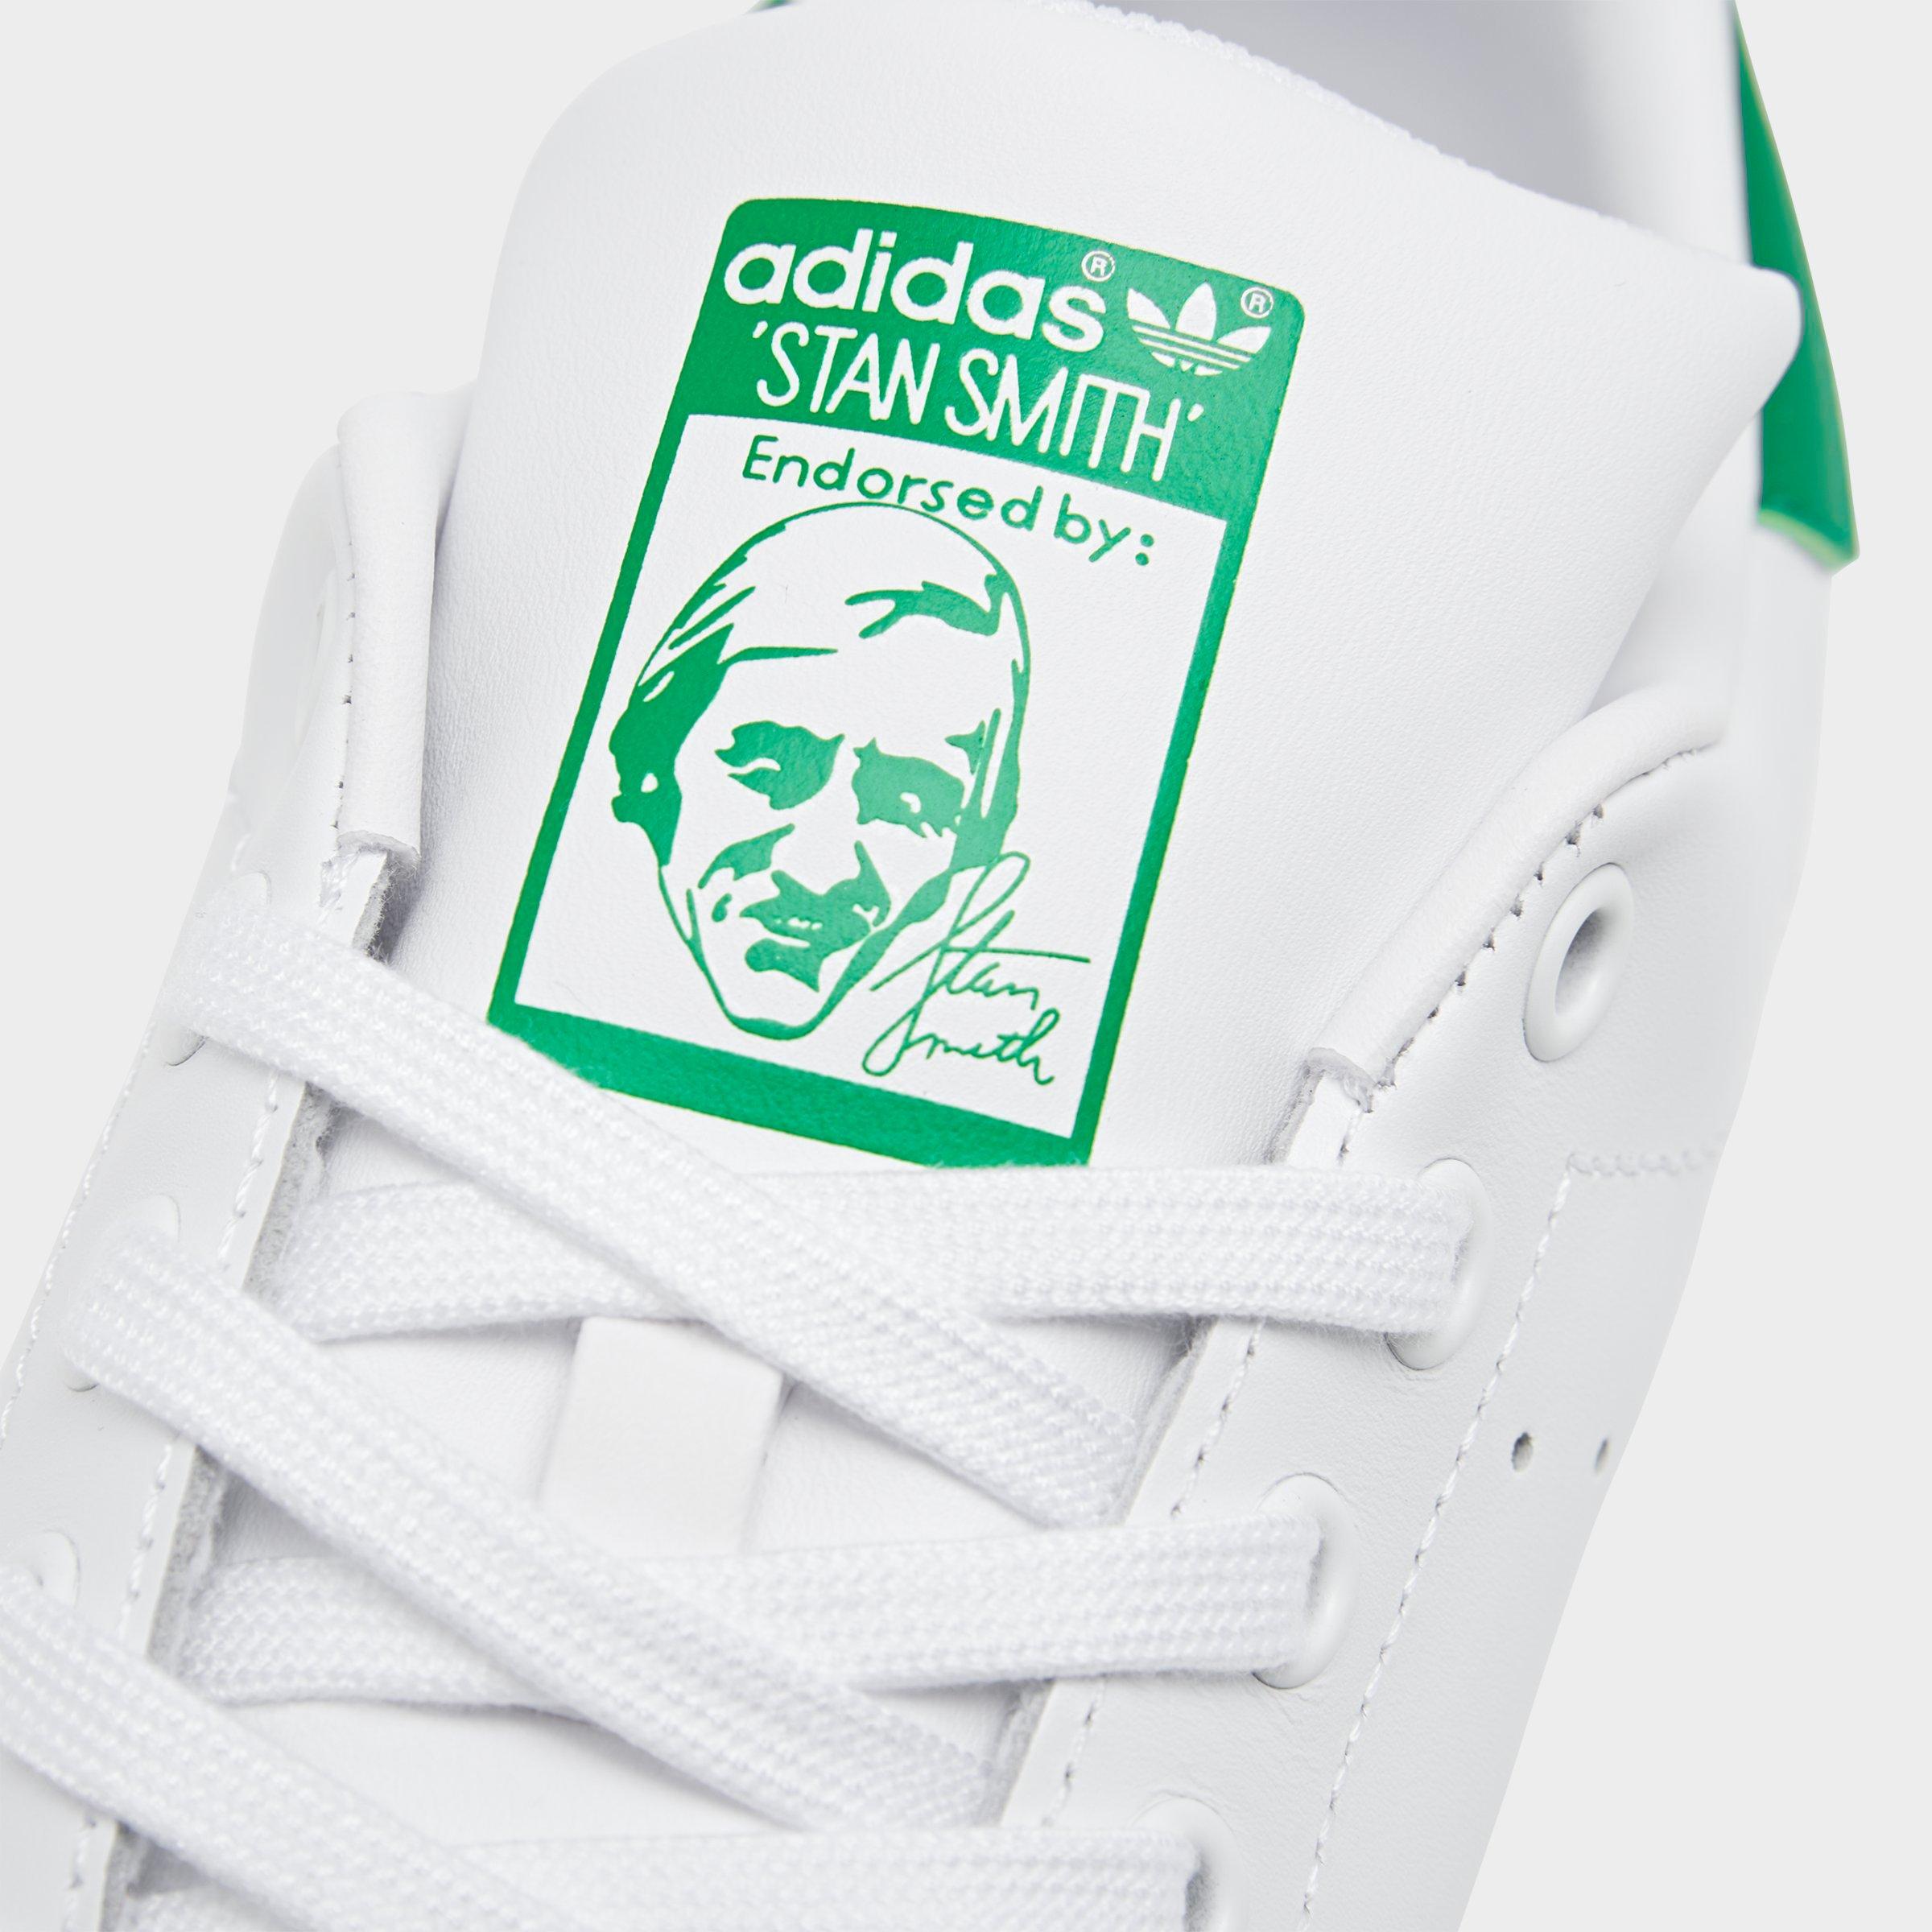 adidas originals stan smith shoes men's